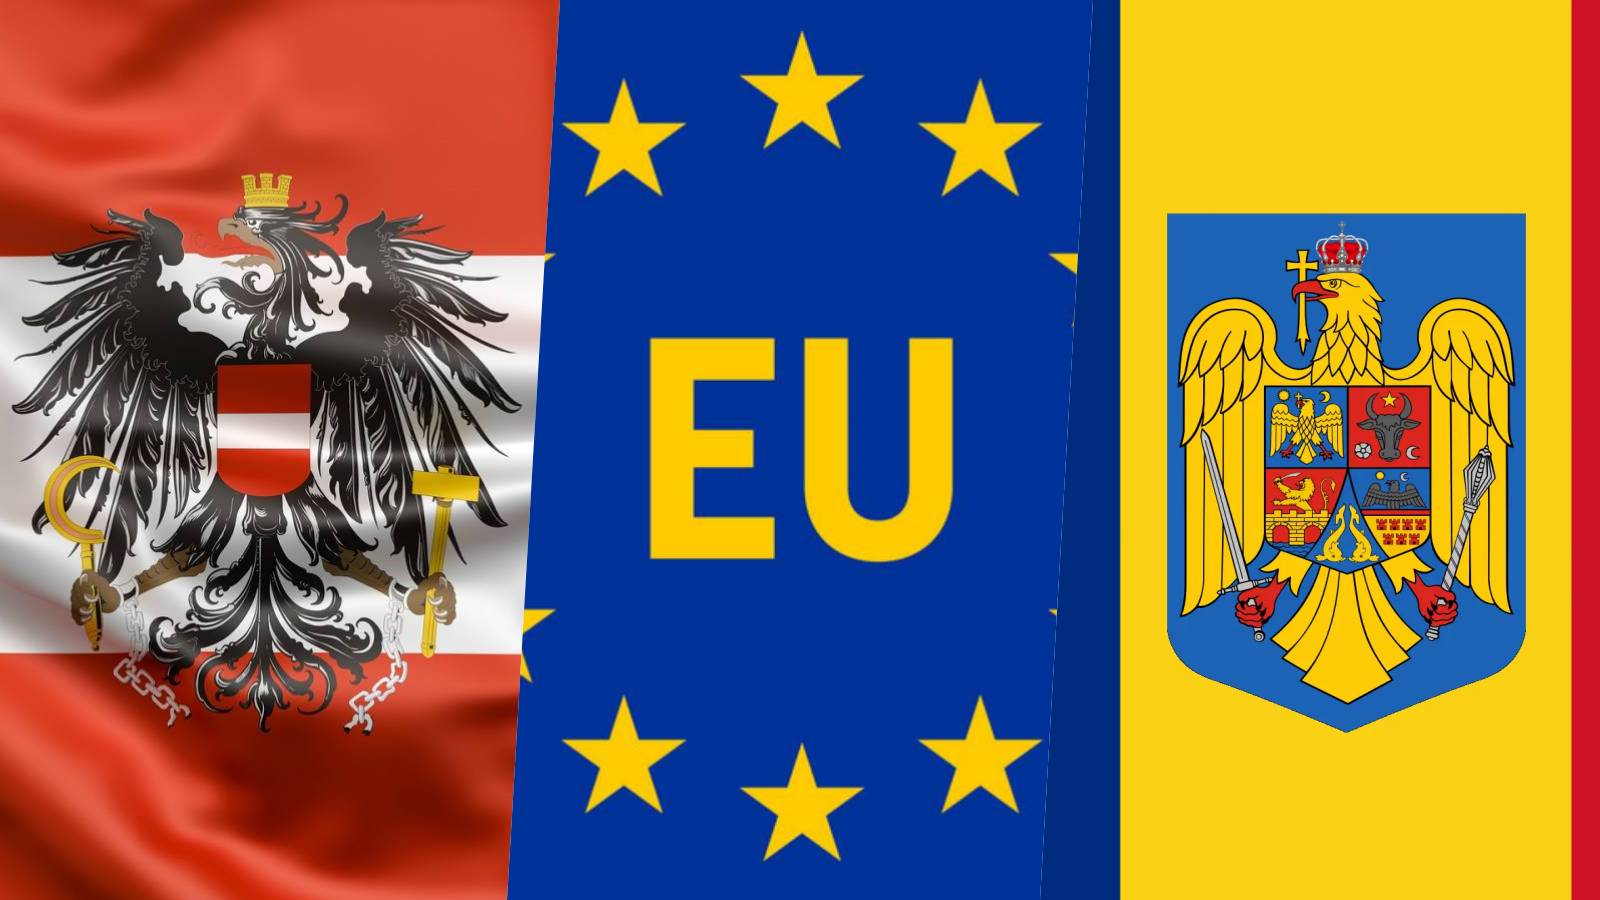 Austria IMPIEDICA Romania Adere Spatiul Schengen Gerhard Karner cere Masuri Suplimentare